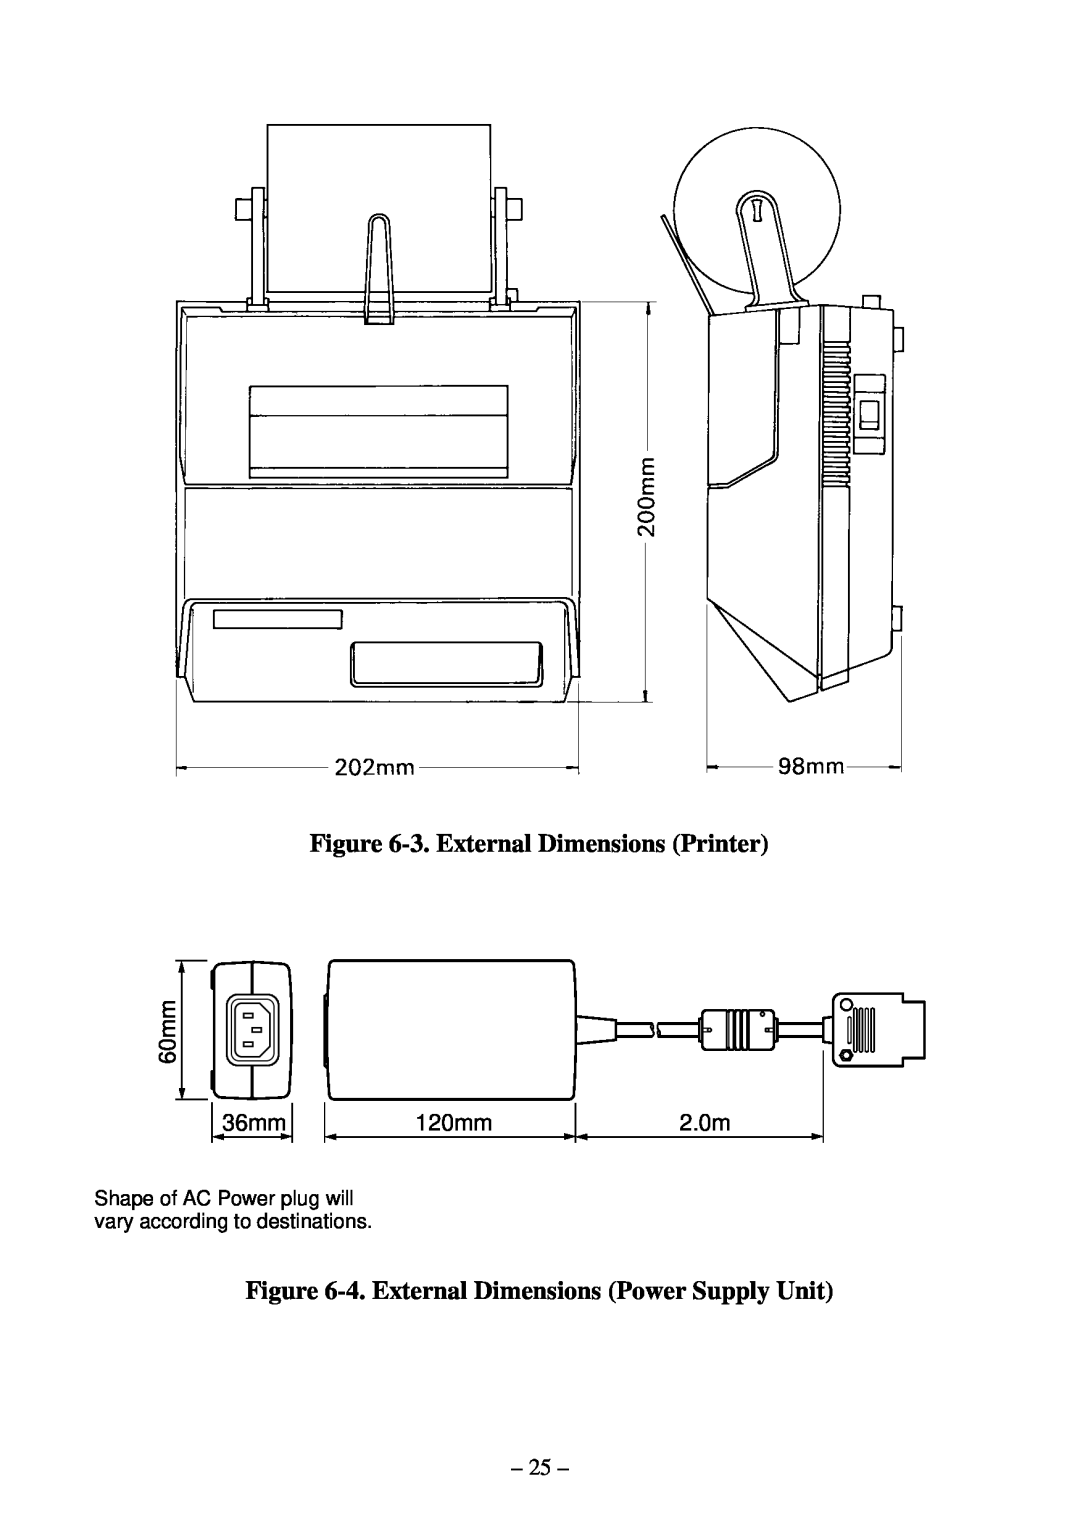 Star Micronics DP8340 3. External Dimensions Printer, 4. External Dimensions Power Supply Unit, 60mm 36mm, 120mm, 2.0m 